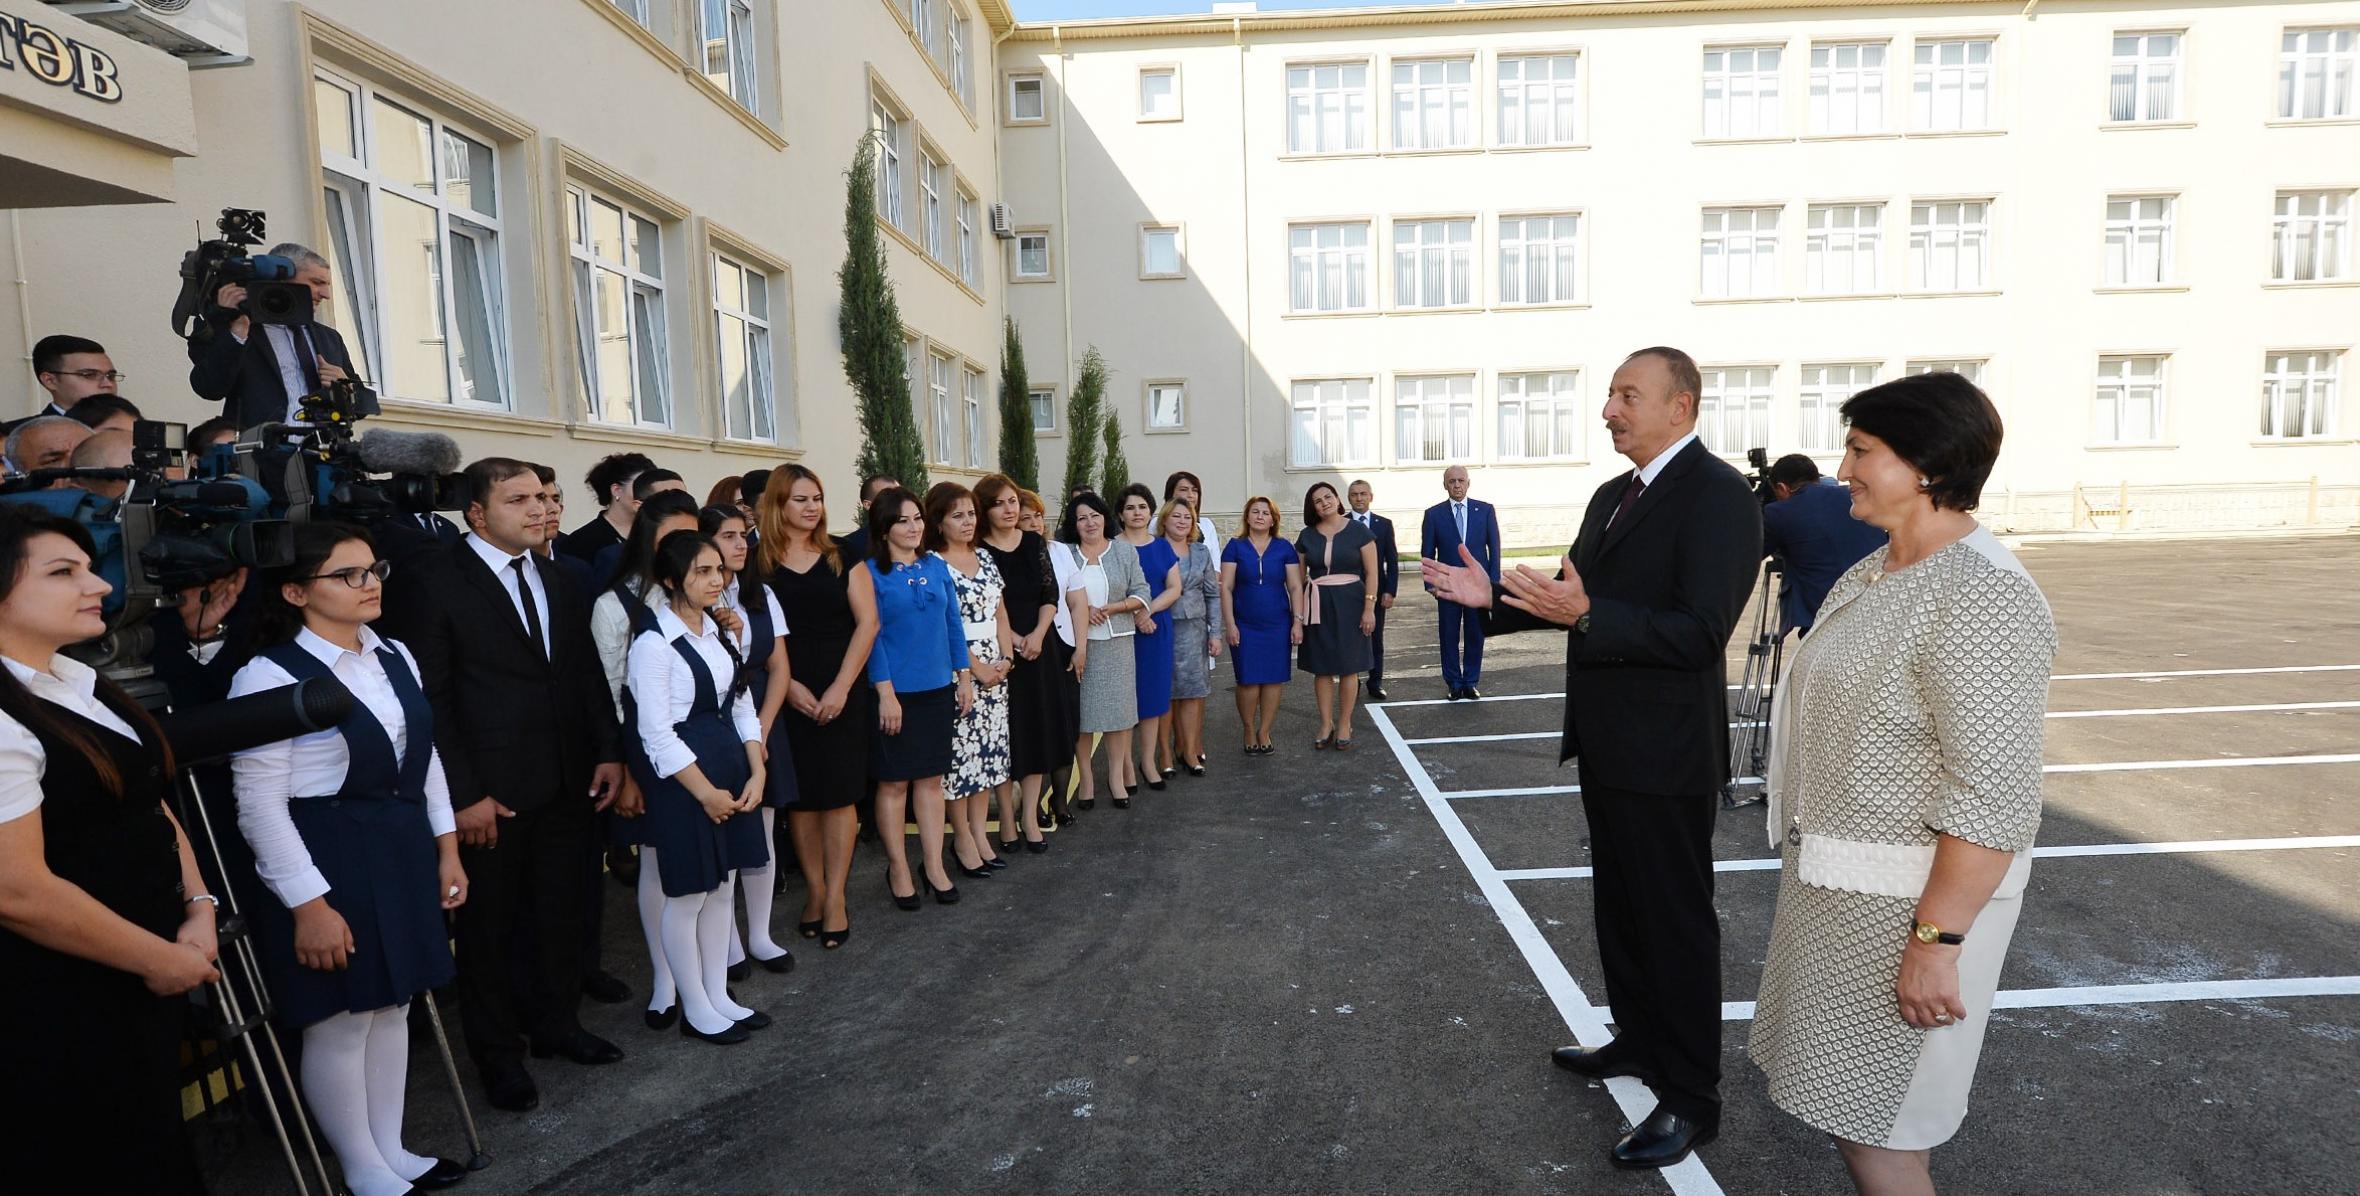 Speech by Ilham Aliyev at the opening of ew building of school No. 311 in Baku